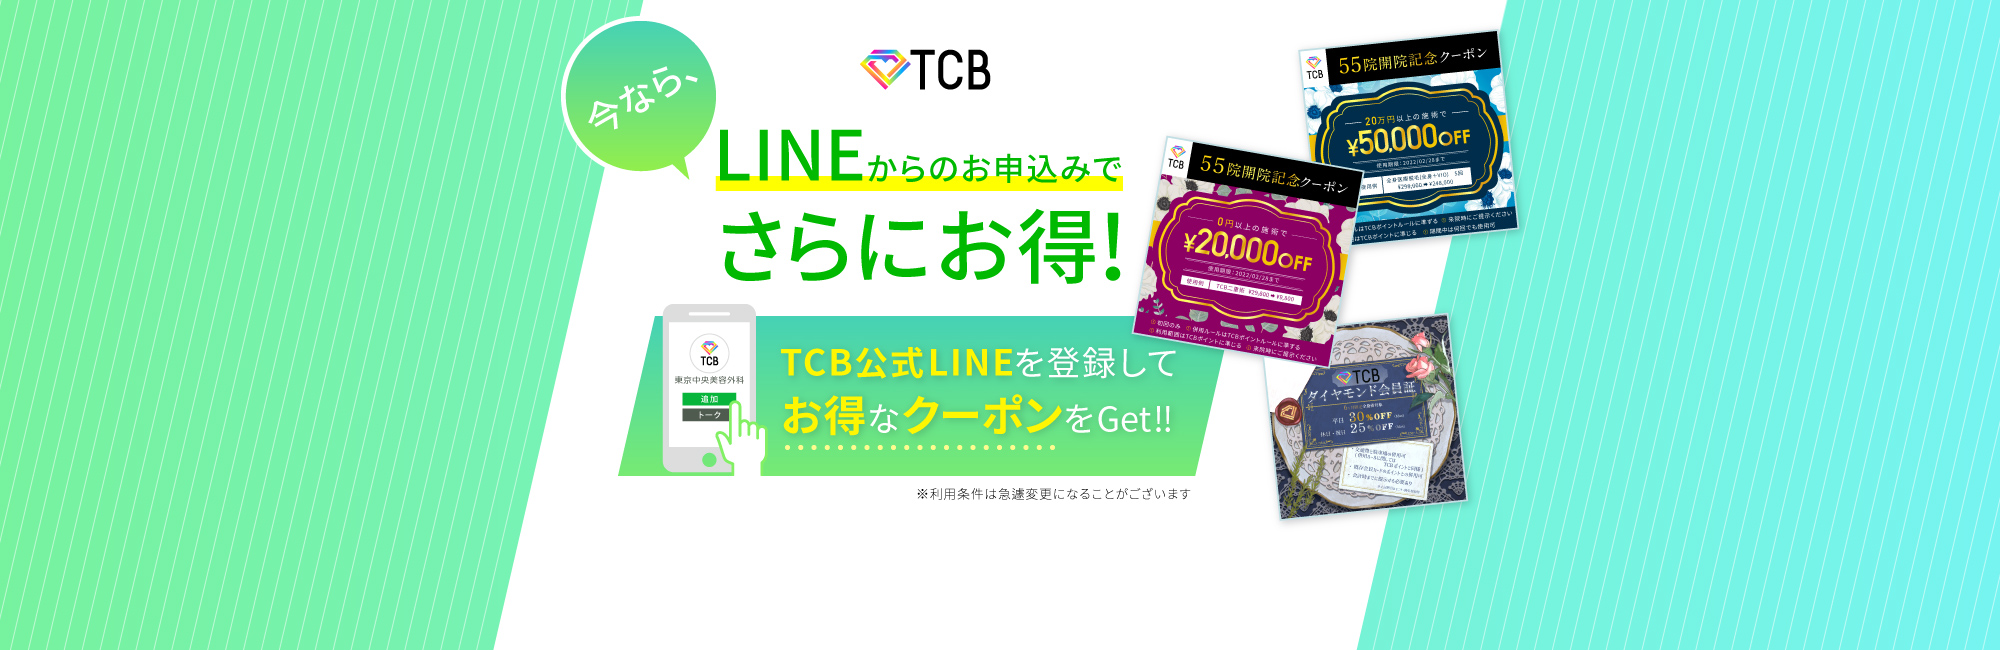 TCB公式LINEを登録してお得なクーポンをゲット!!